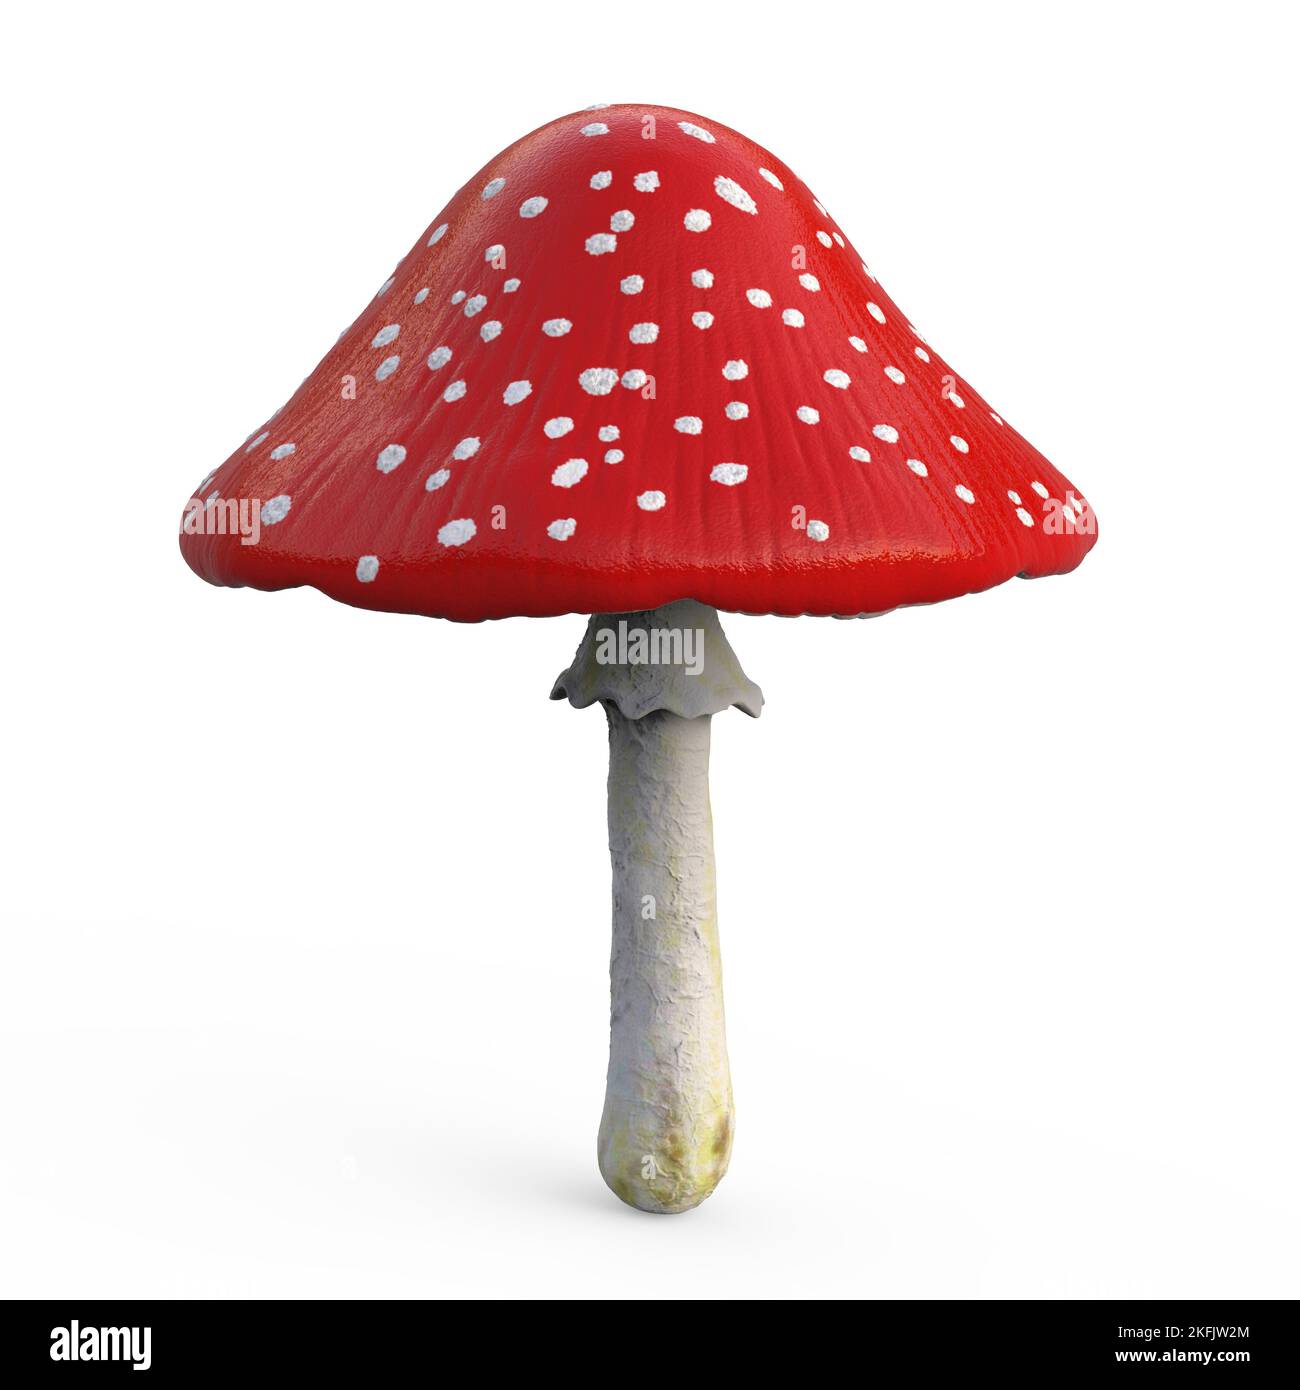 Fly agaric mushroom, illustration Stock Photo